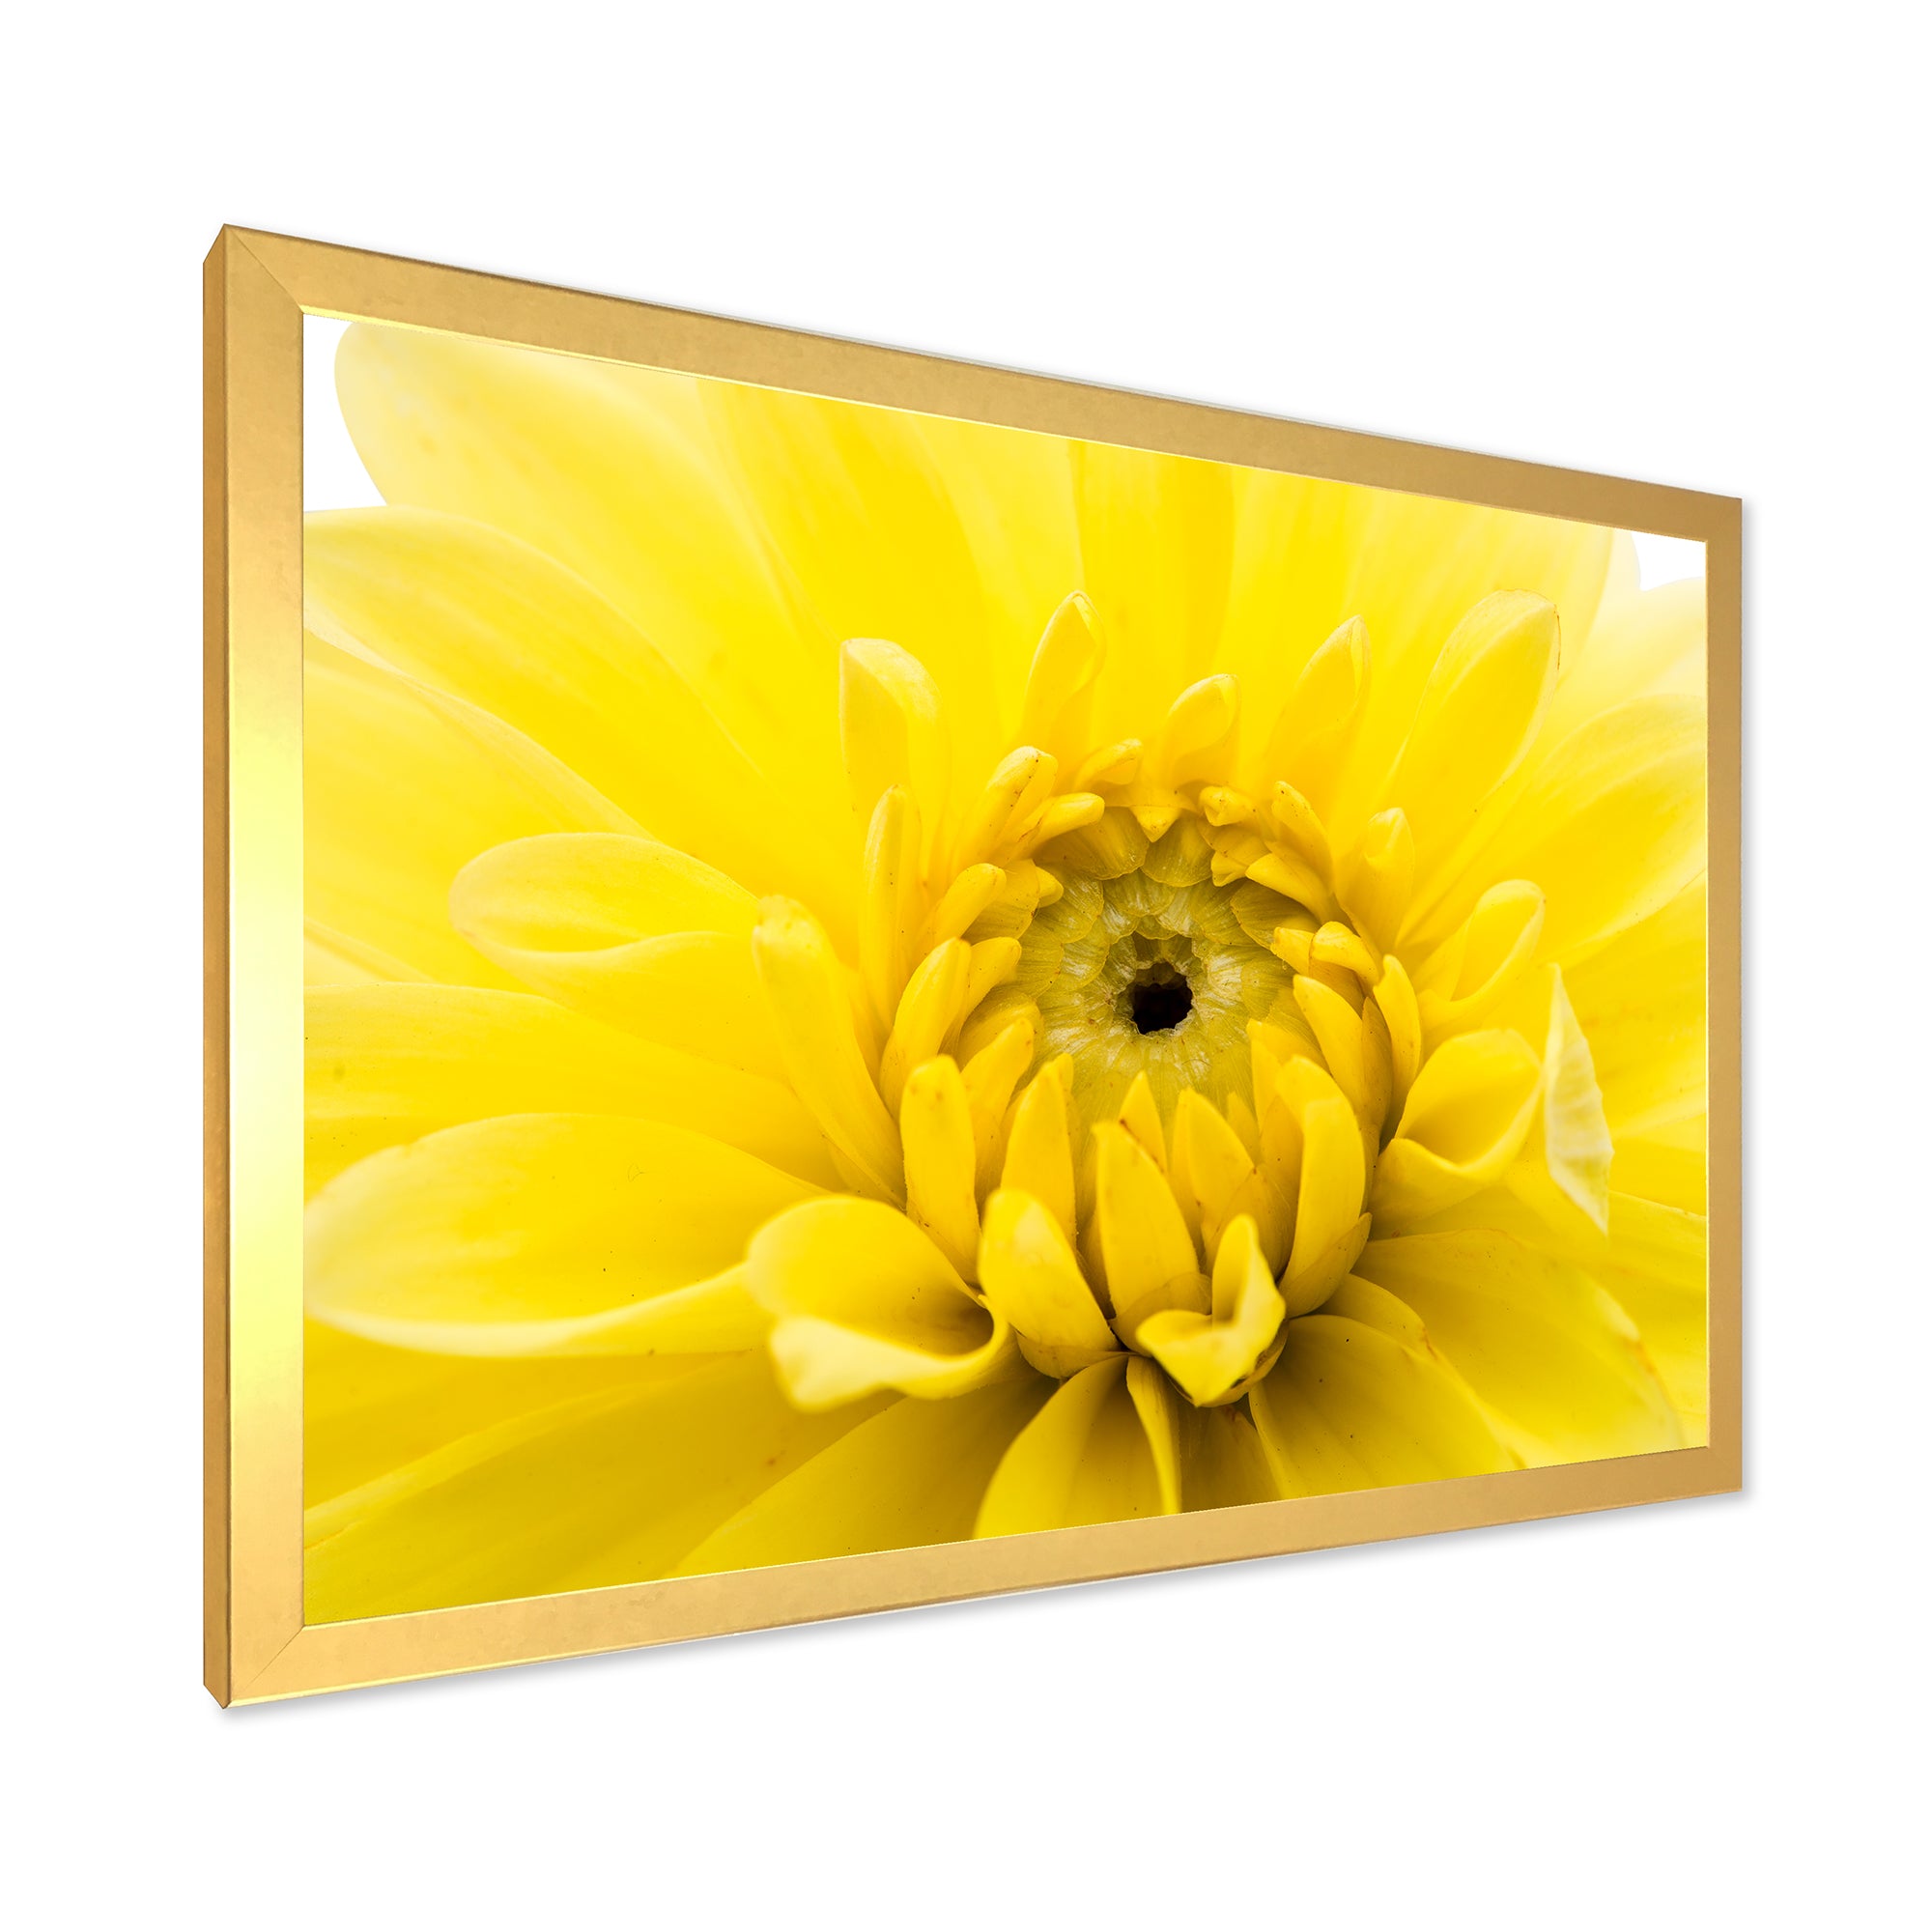 Yellow Chrysanthemum Gold Flower